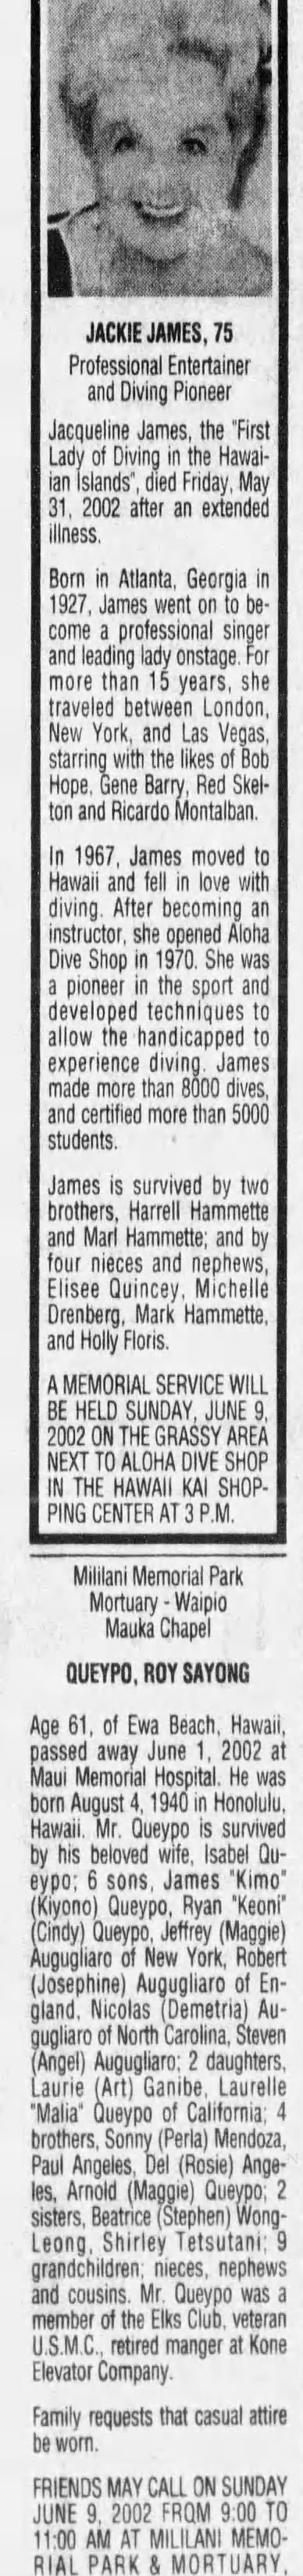 Obituary for JACKIE JAMES, 1927-2002 (Aged 61)